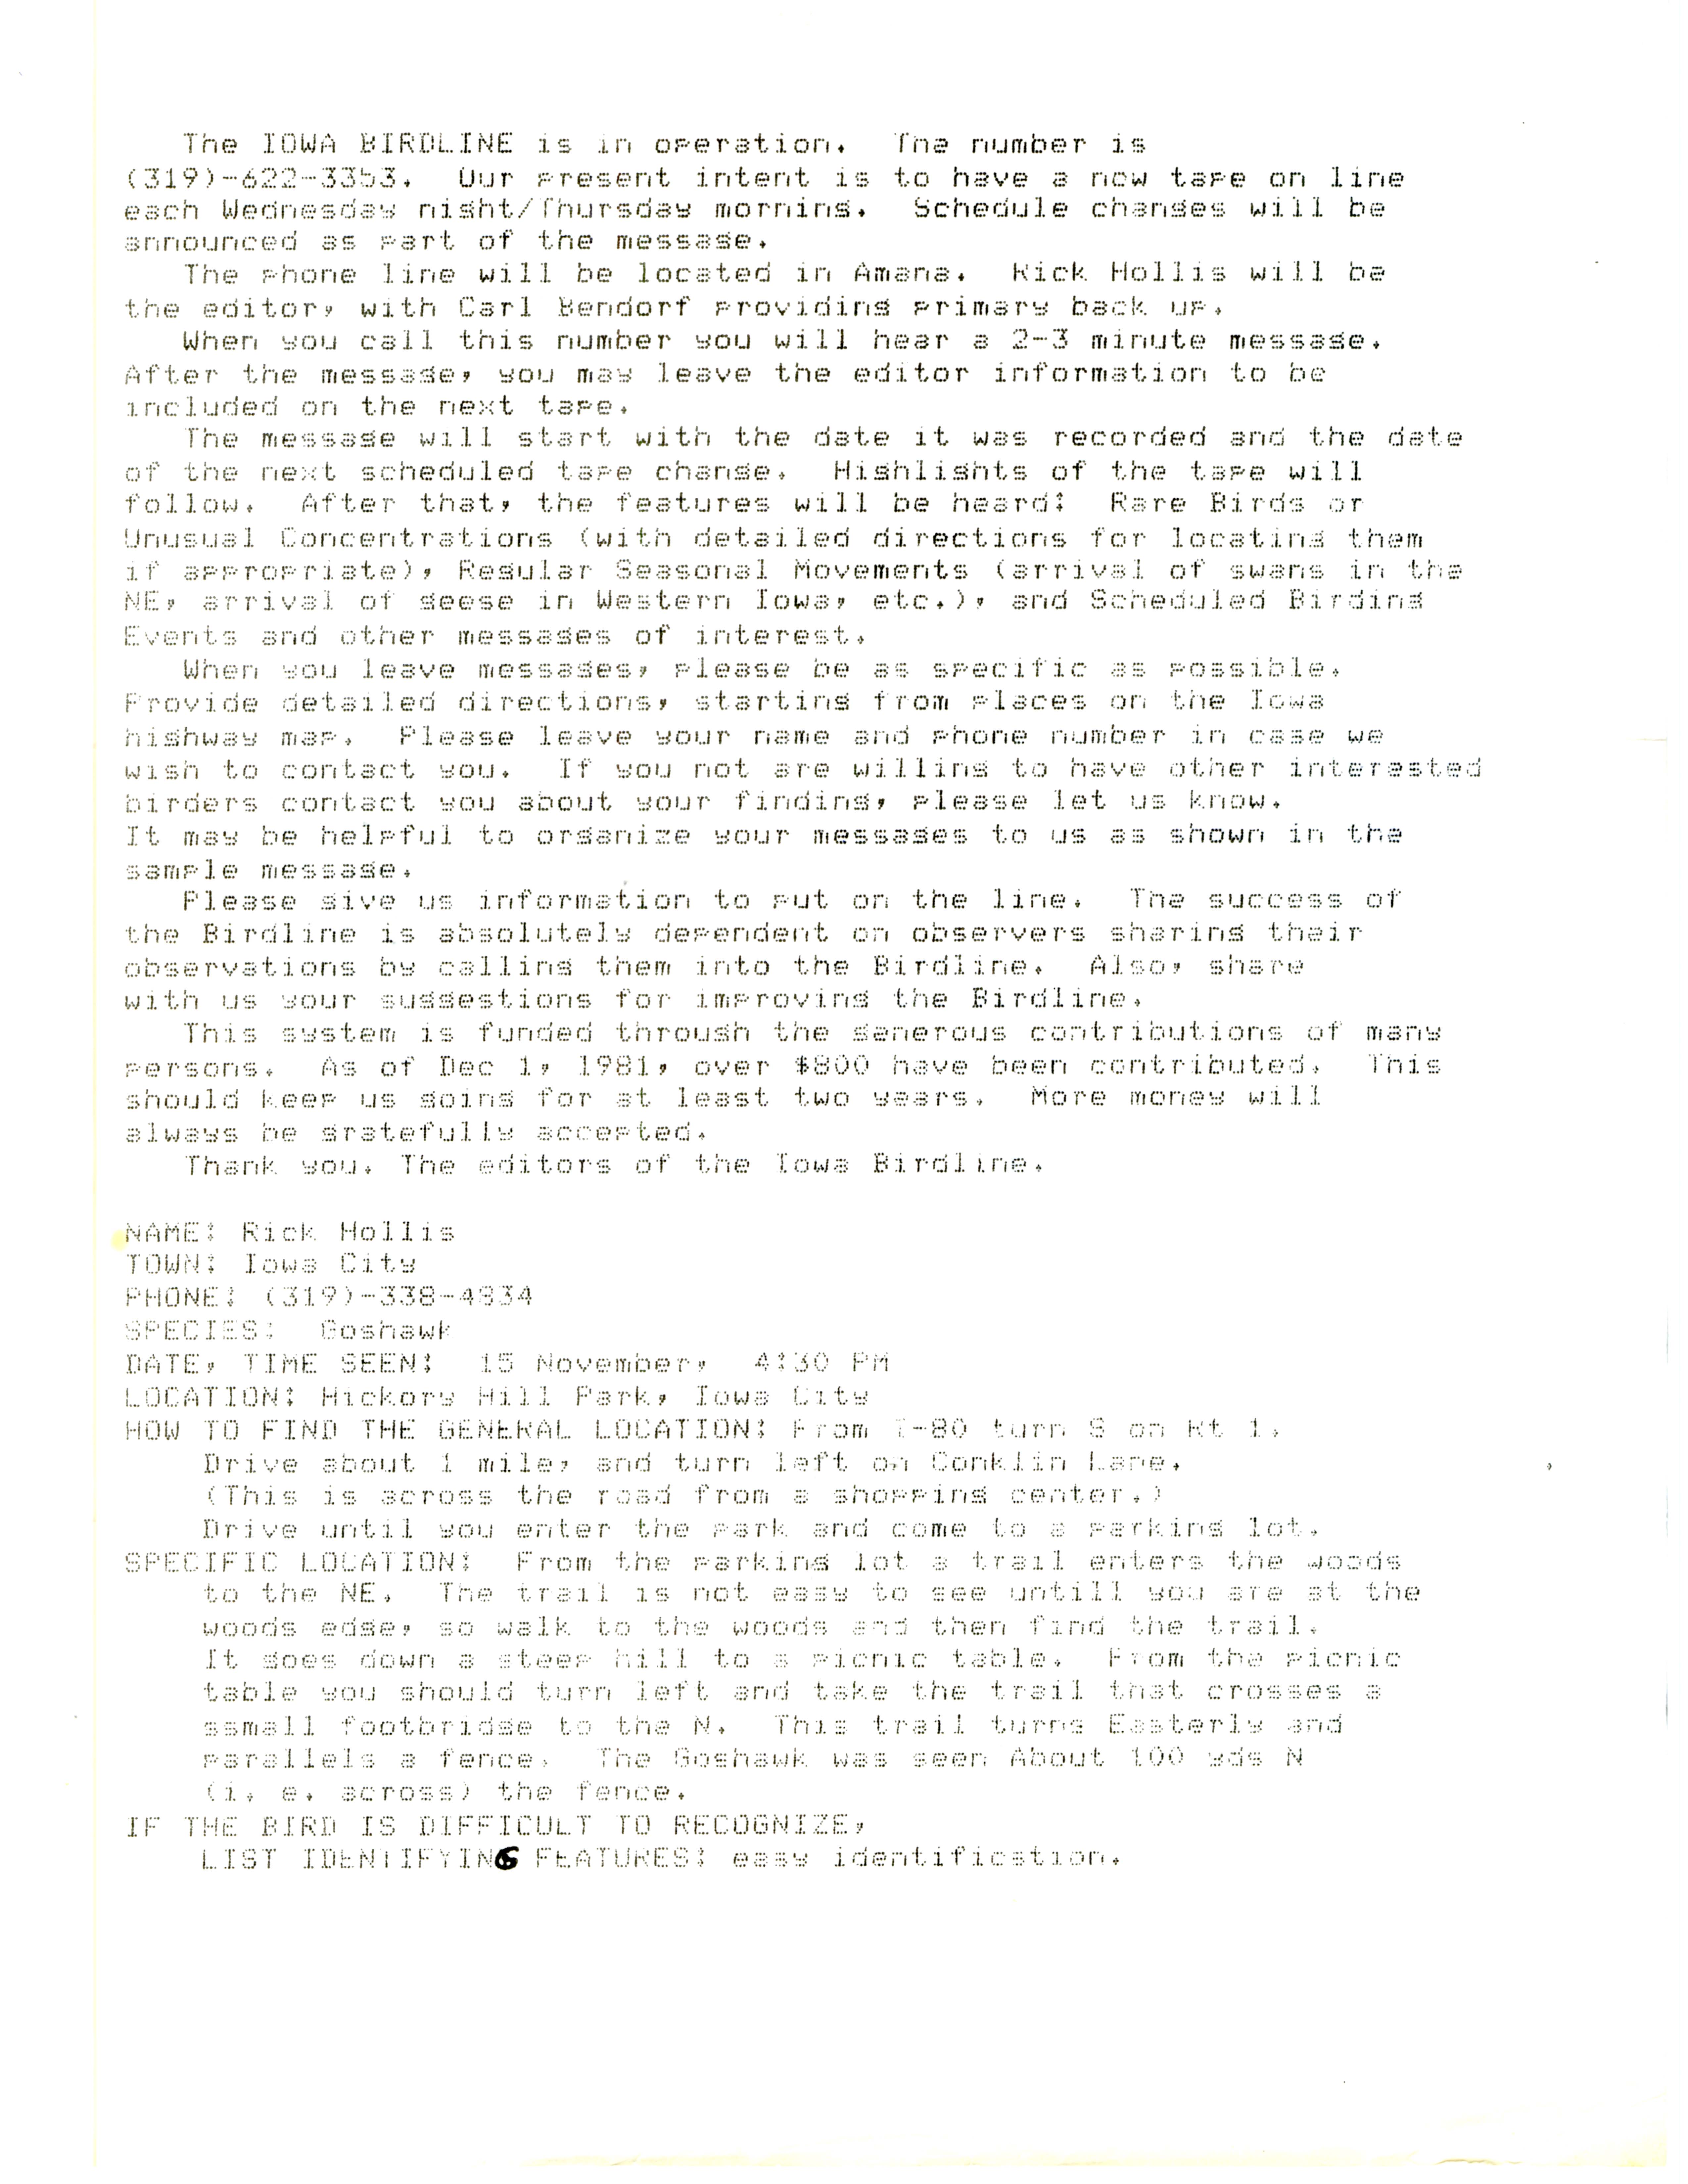 Richard Jule Hollis letter to Hank Zaletel regarding the Iowa Birdline, December 17, 1981